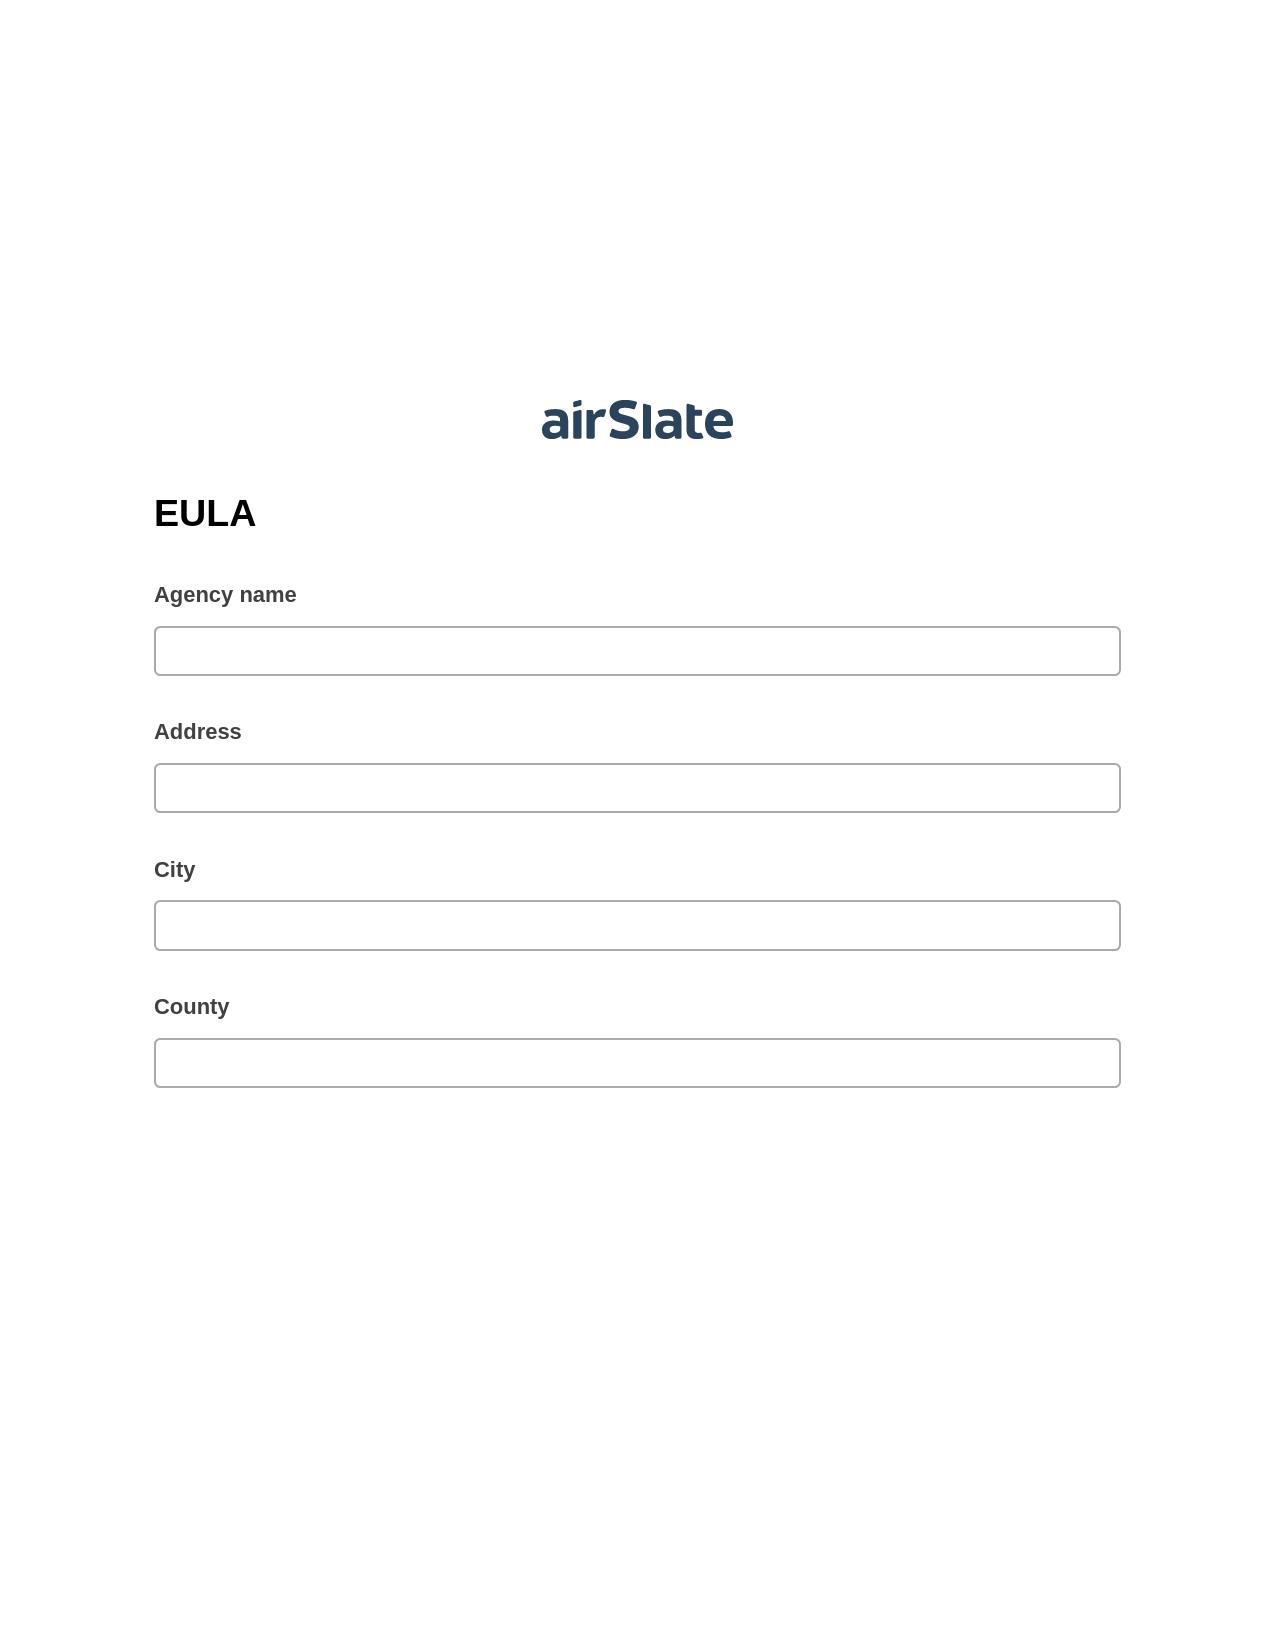 Multirole EULA Pre-fill Slate from MS Dynamics 365 Records Bot, SendGrid send Campaign bot, Slack Notification Postfinish Bot